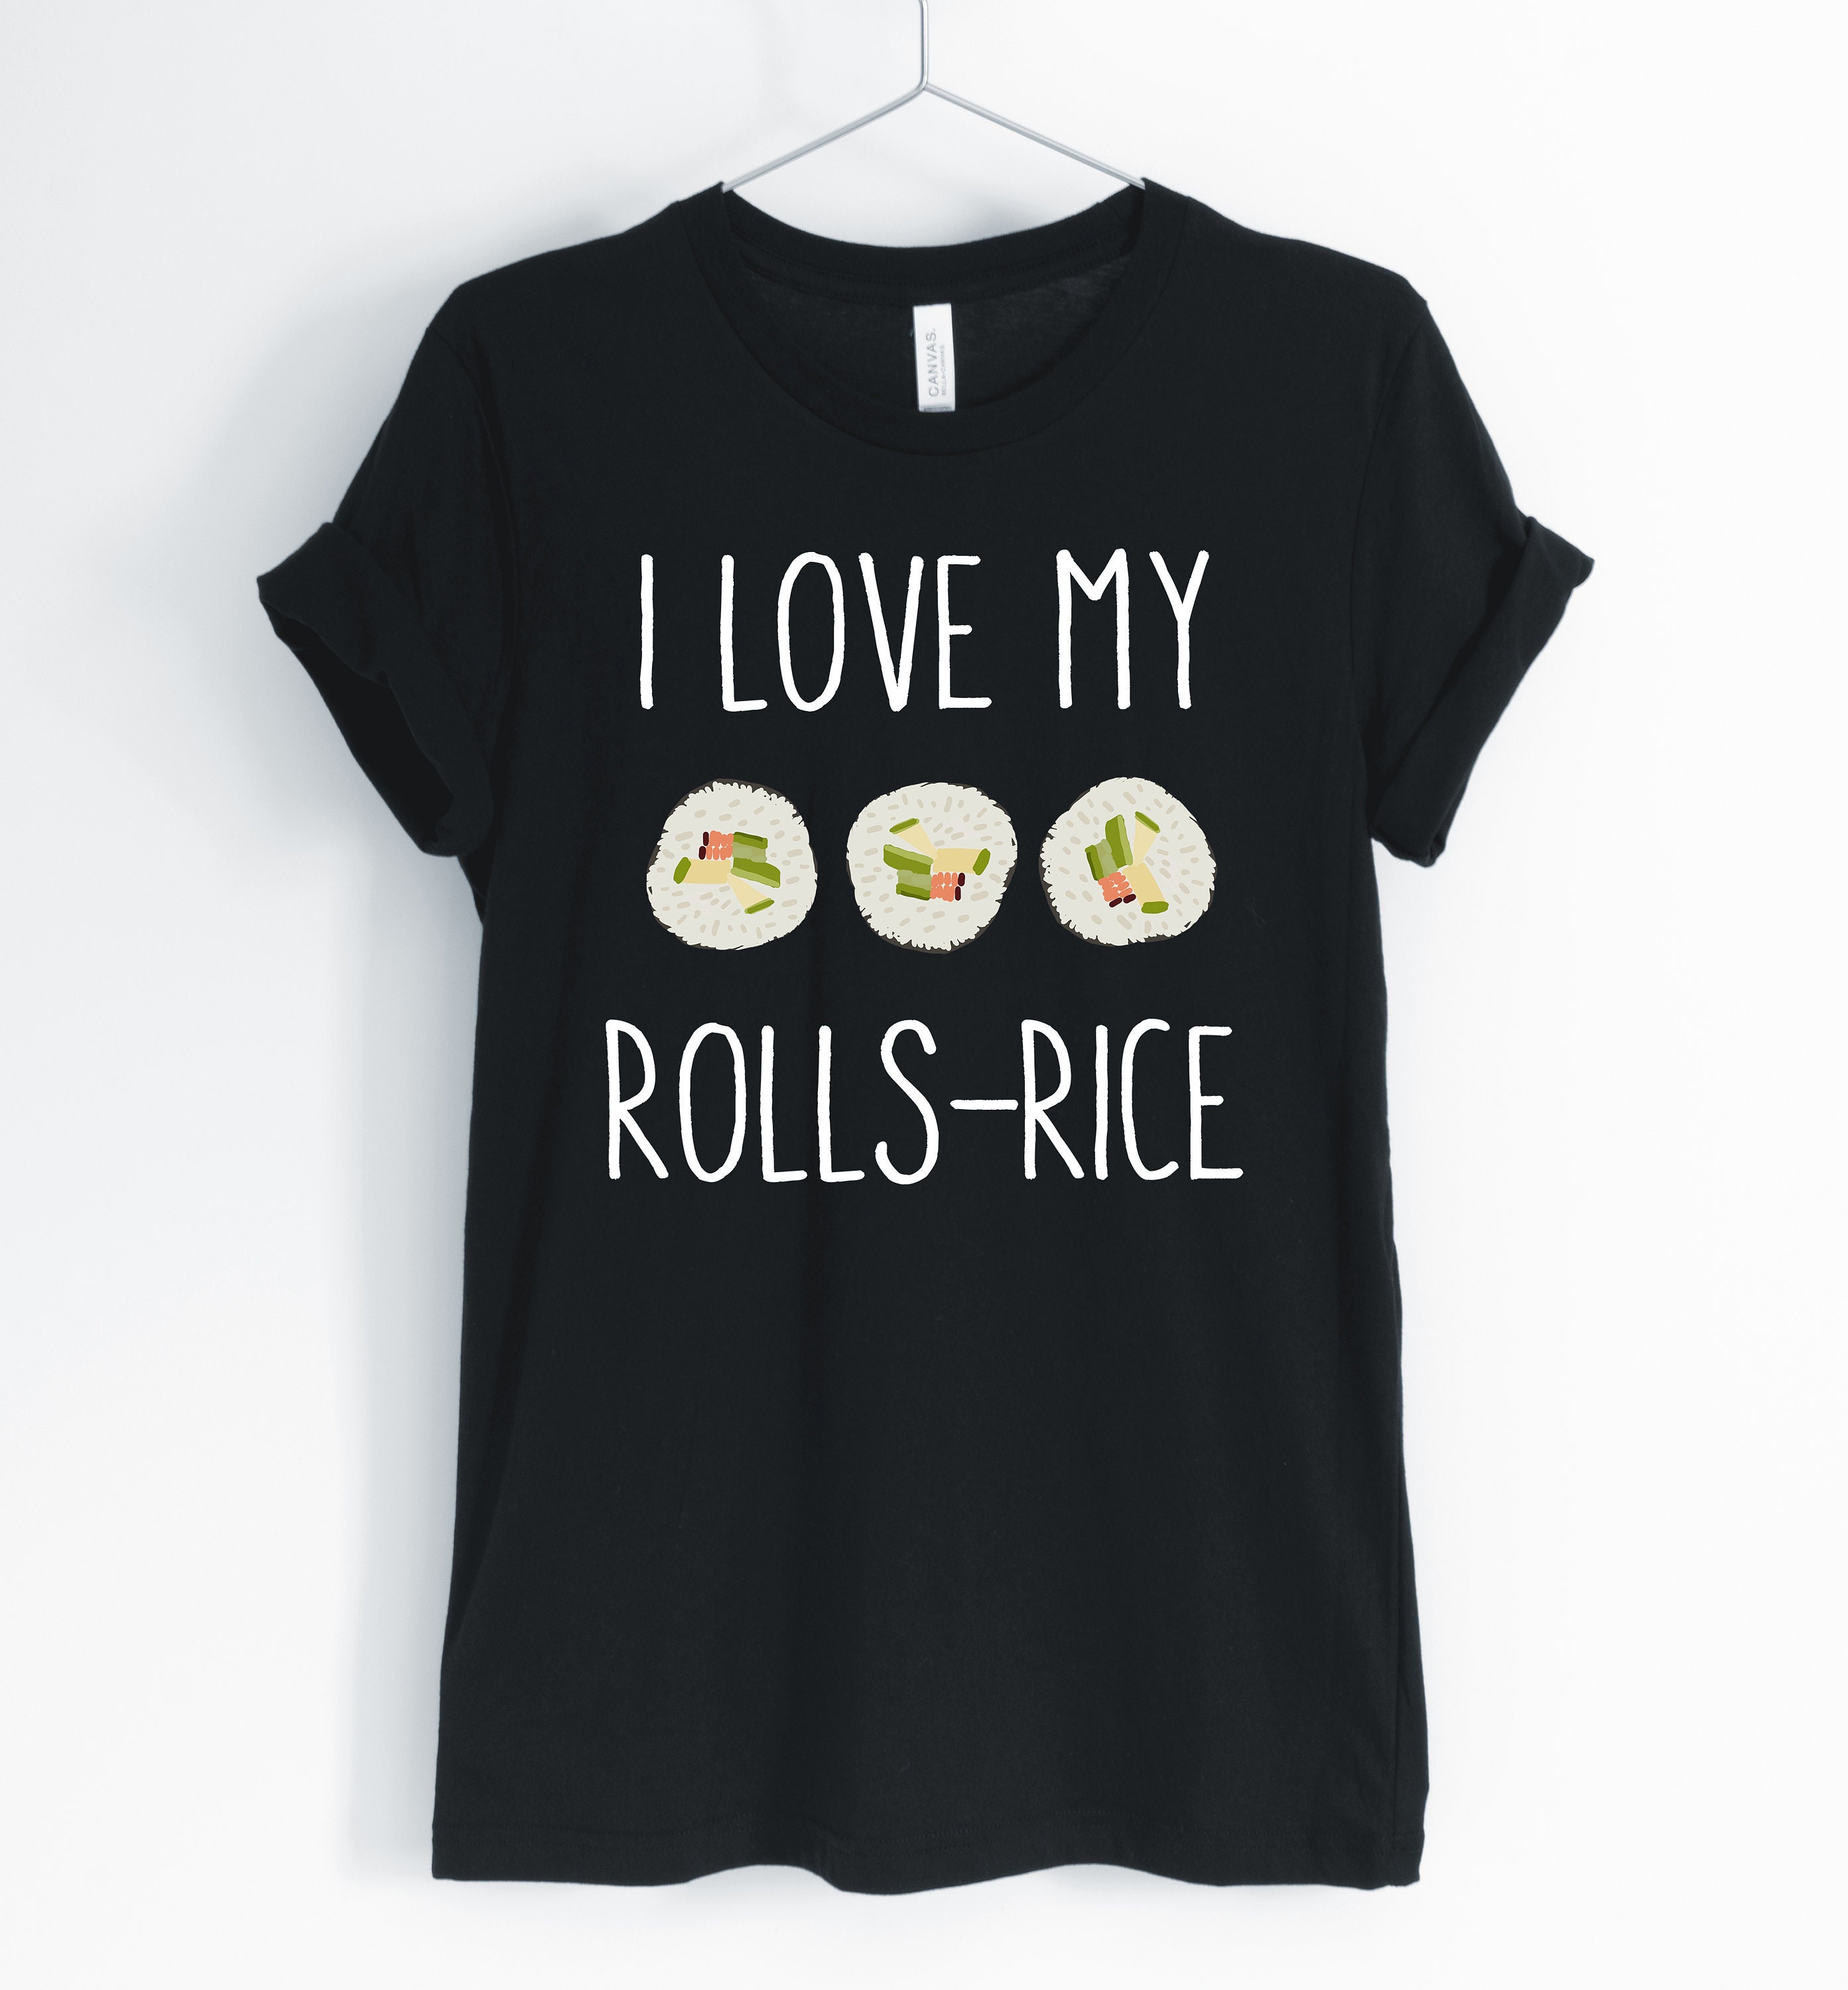 I Love My Rolls-Rice, Sushi, Sushi Lover Shirt, Seafood & Japanese Tee, Funny Pun T-Shirt, Unisex & Women's Shirts